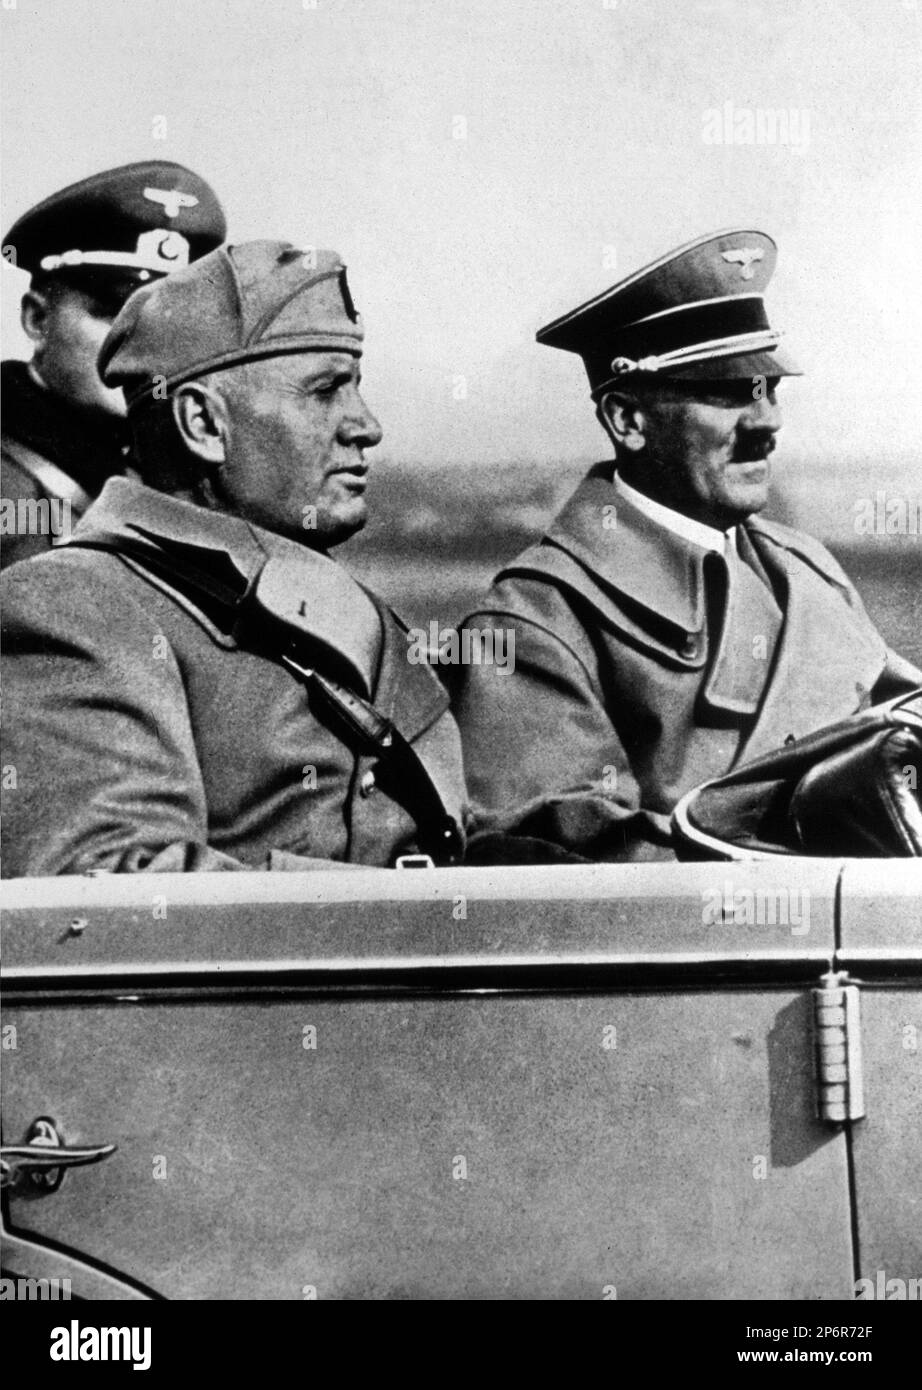 1930er Jahre, DEUTSCHLAND : der deutsche Diktator ADOLF HITLER ( 1889 - 1945 ) mit BENITO MUSSOLINI italian Duce . - FASCHISMUS - FASCHISMUS - FASCHISTEN - FASCHISTEN - Zweiten Weltkrieg - NAZI - NAZIST - SECONDA GUERRA MONDIALE - NAZISMO - NAZISTA - Dittatore - Baffi - Schnurrbart - POLITICA - POLITICO - RITUTO - Portrait - Militäruniform - divisa uniforme militare ---- Archivio GBB Stockfoto